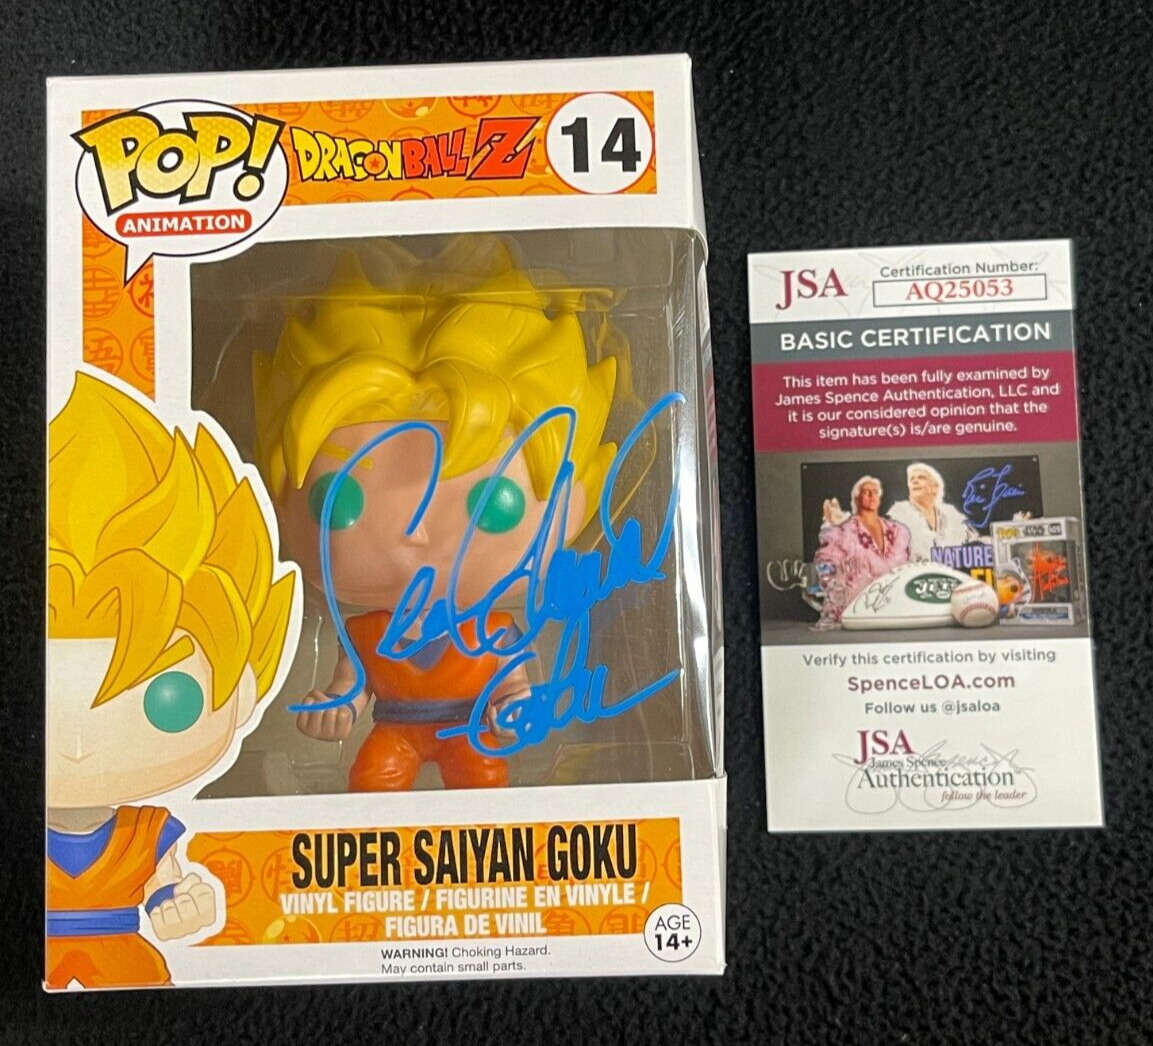 Dragon Ball Z Super Saiyan Goku Funko Pop! #14 Vinyl Figure